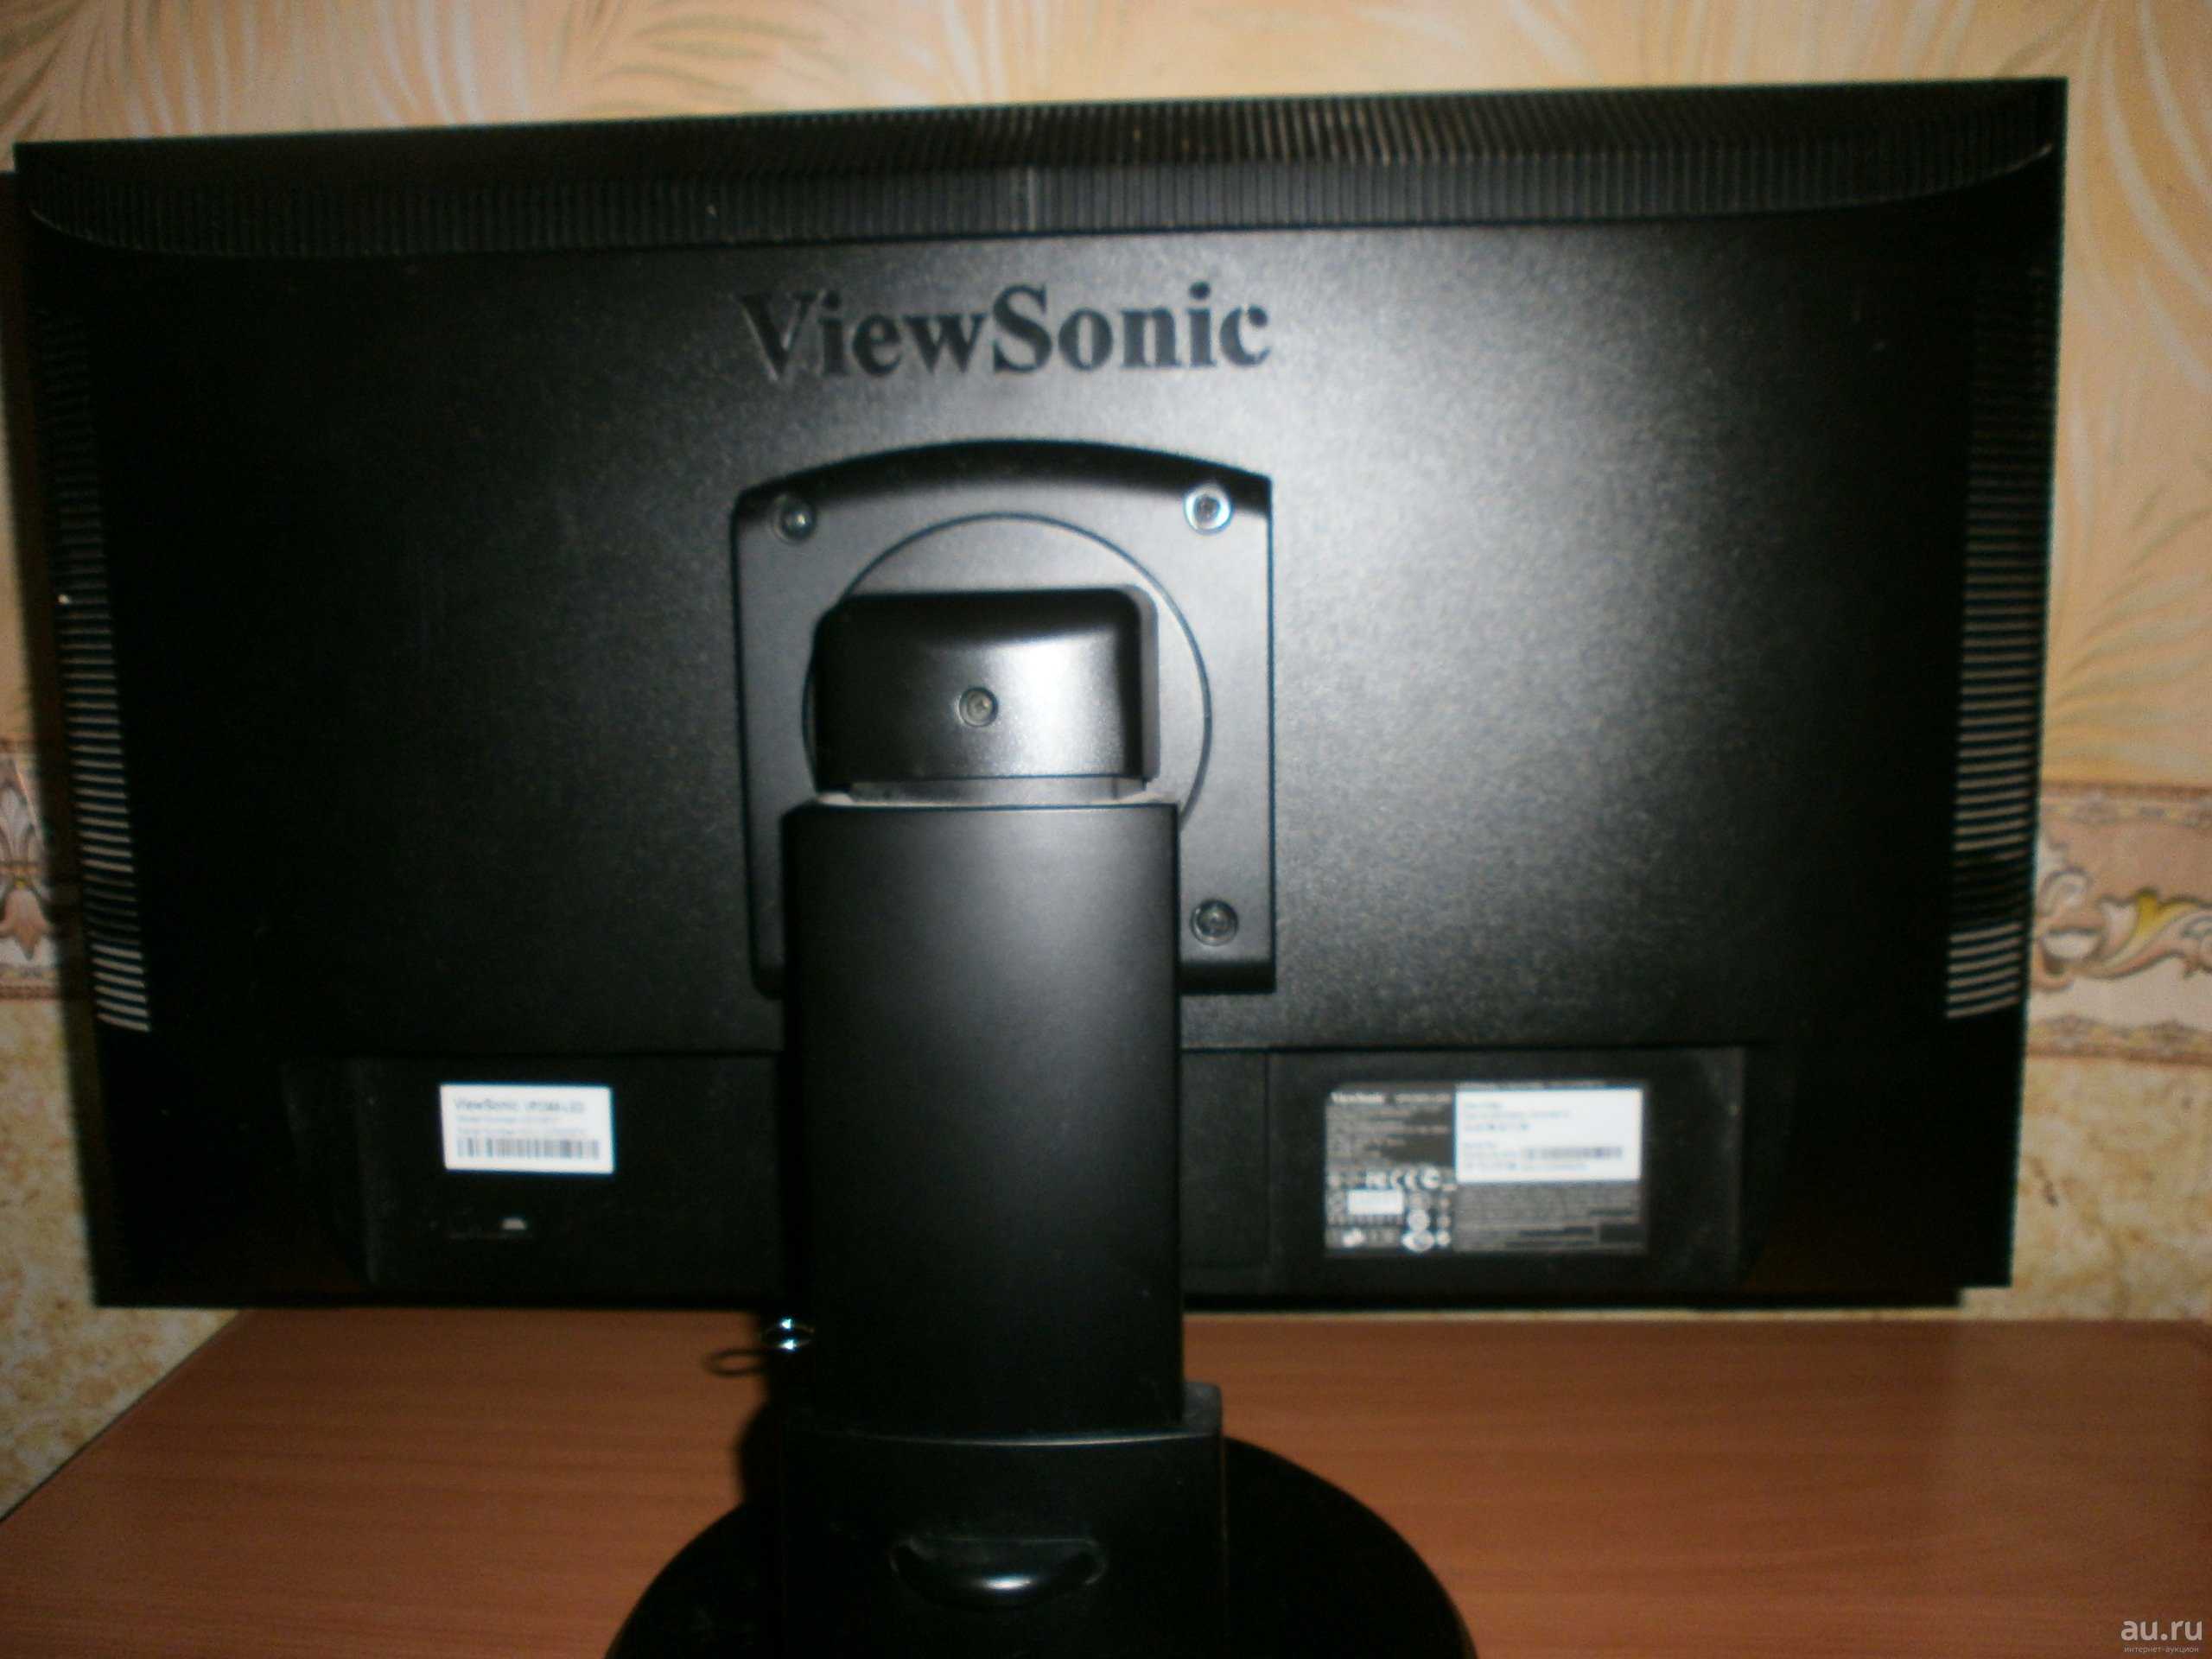 Viewsonic vp2365-led (черный)